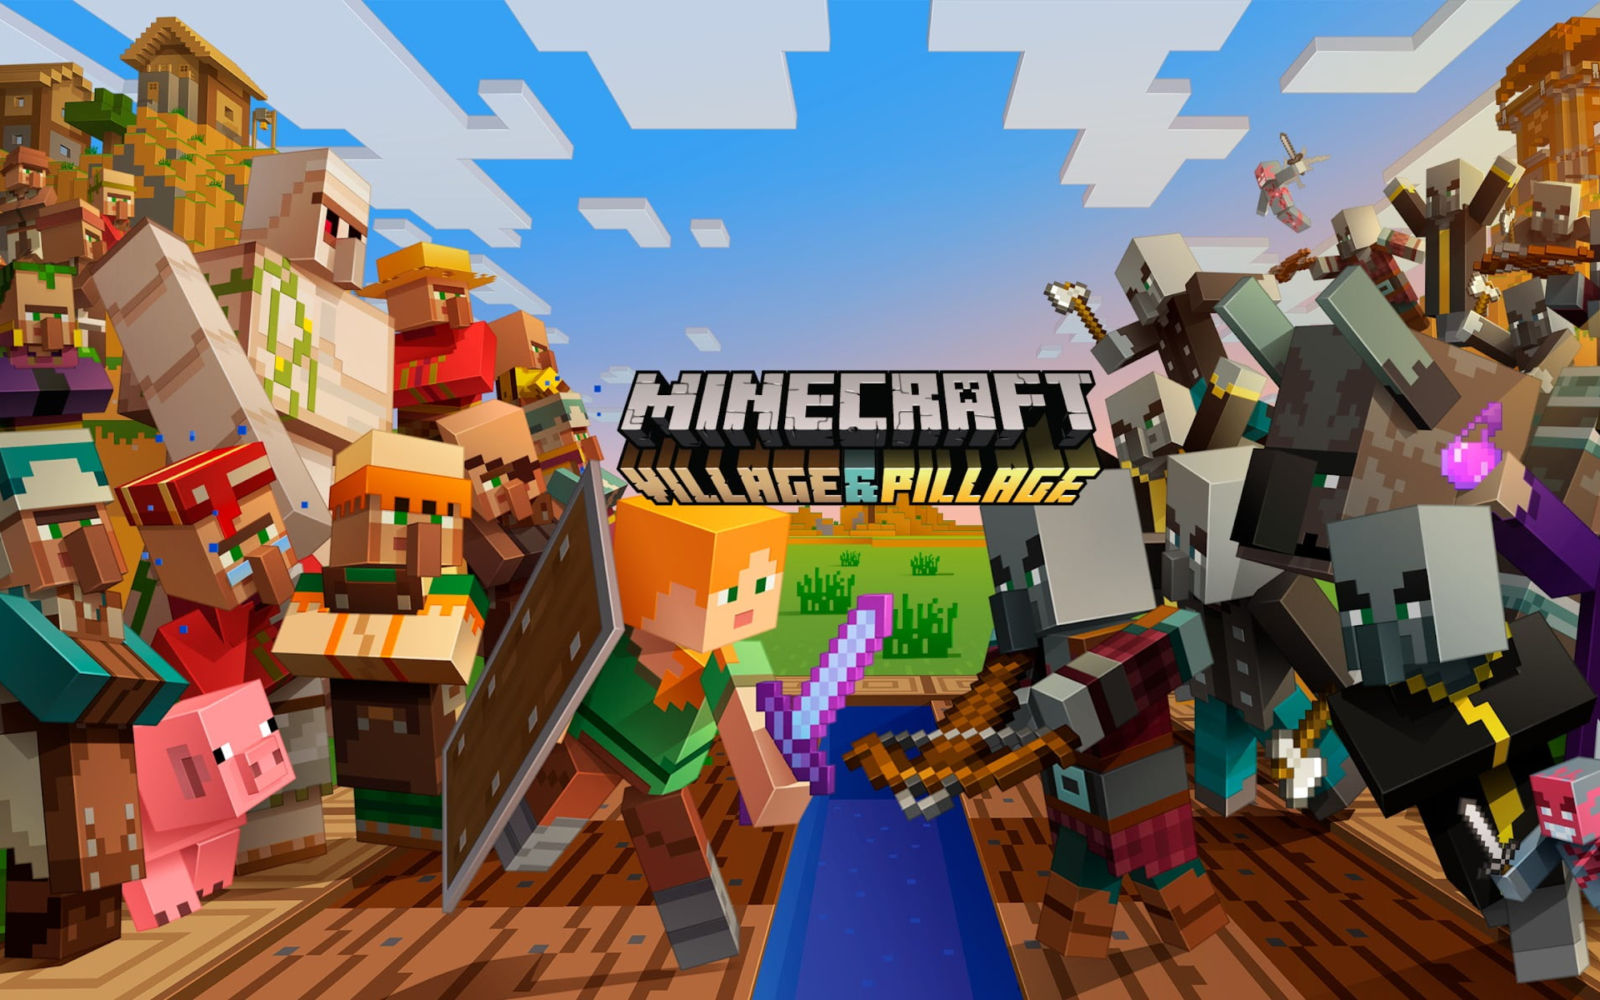 Minecraft Village vs Pillage - Original image